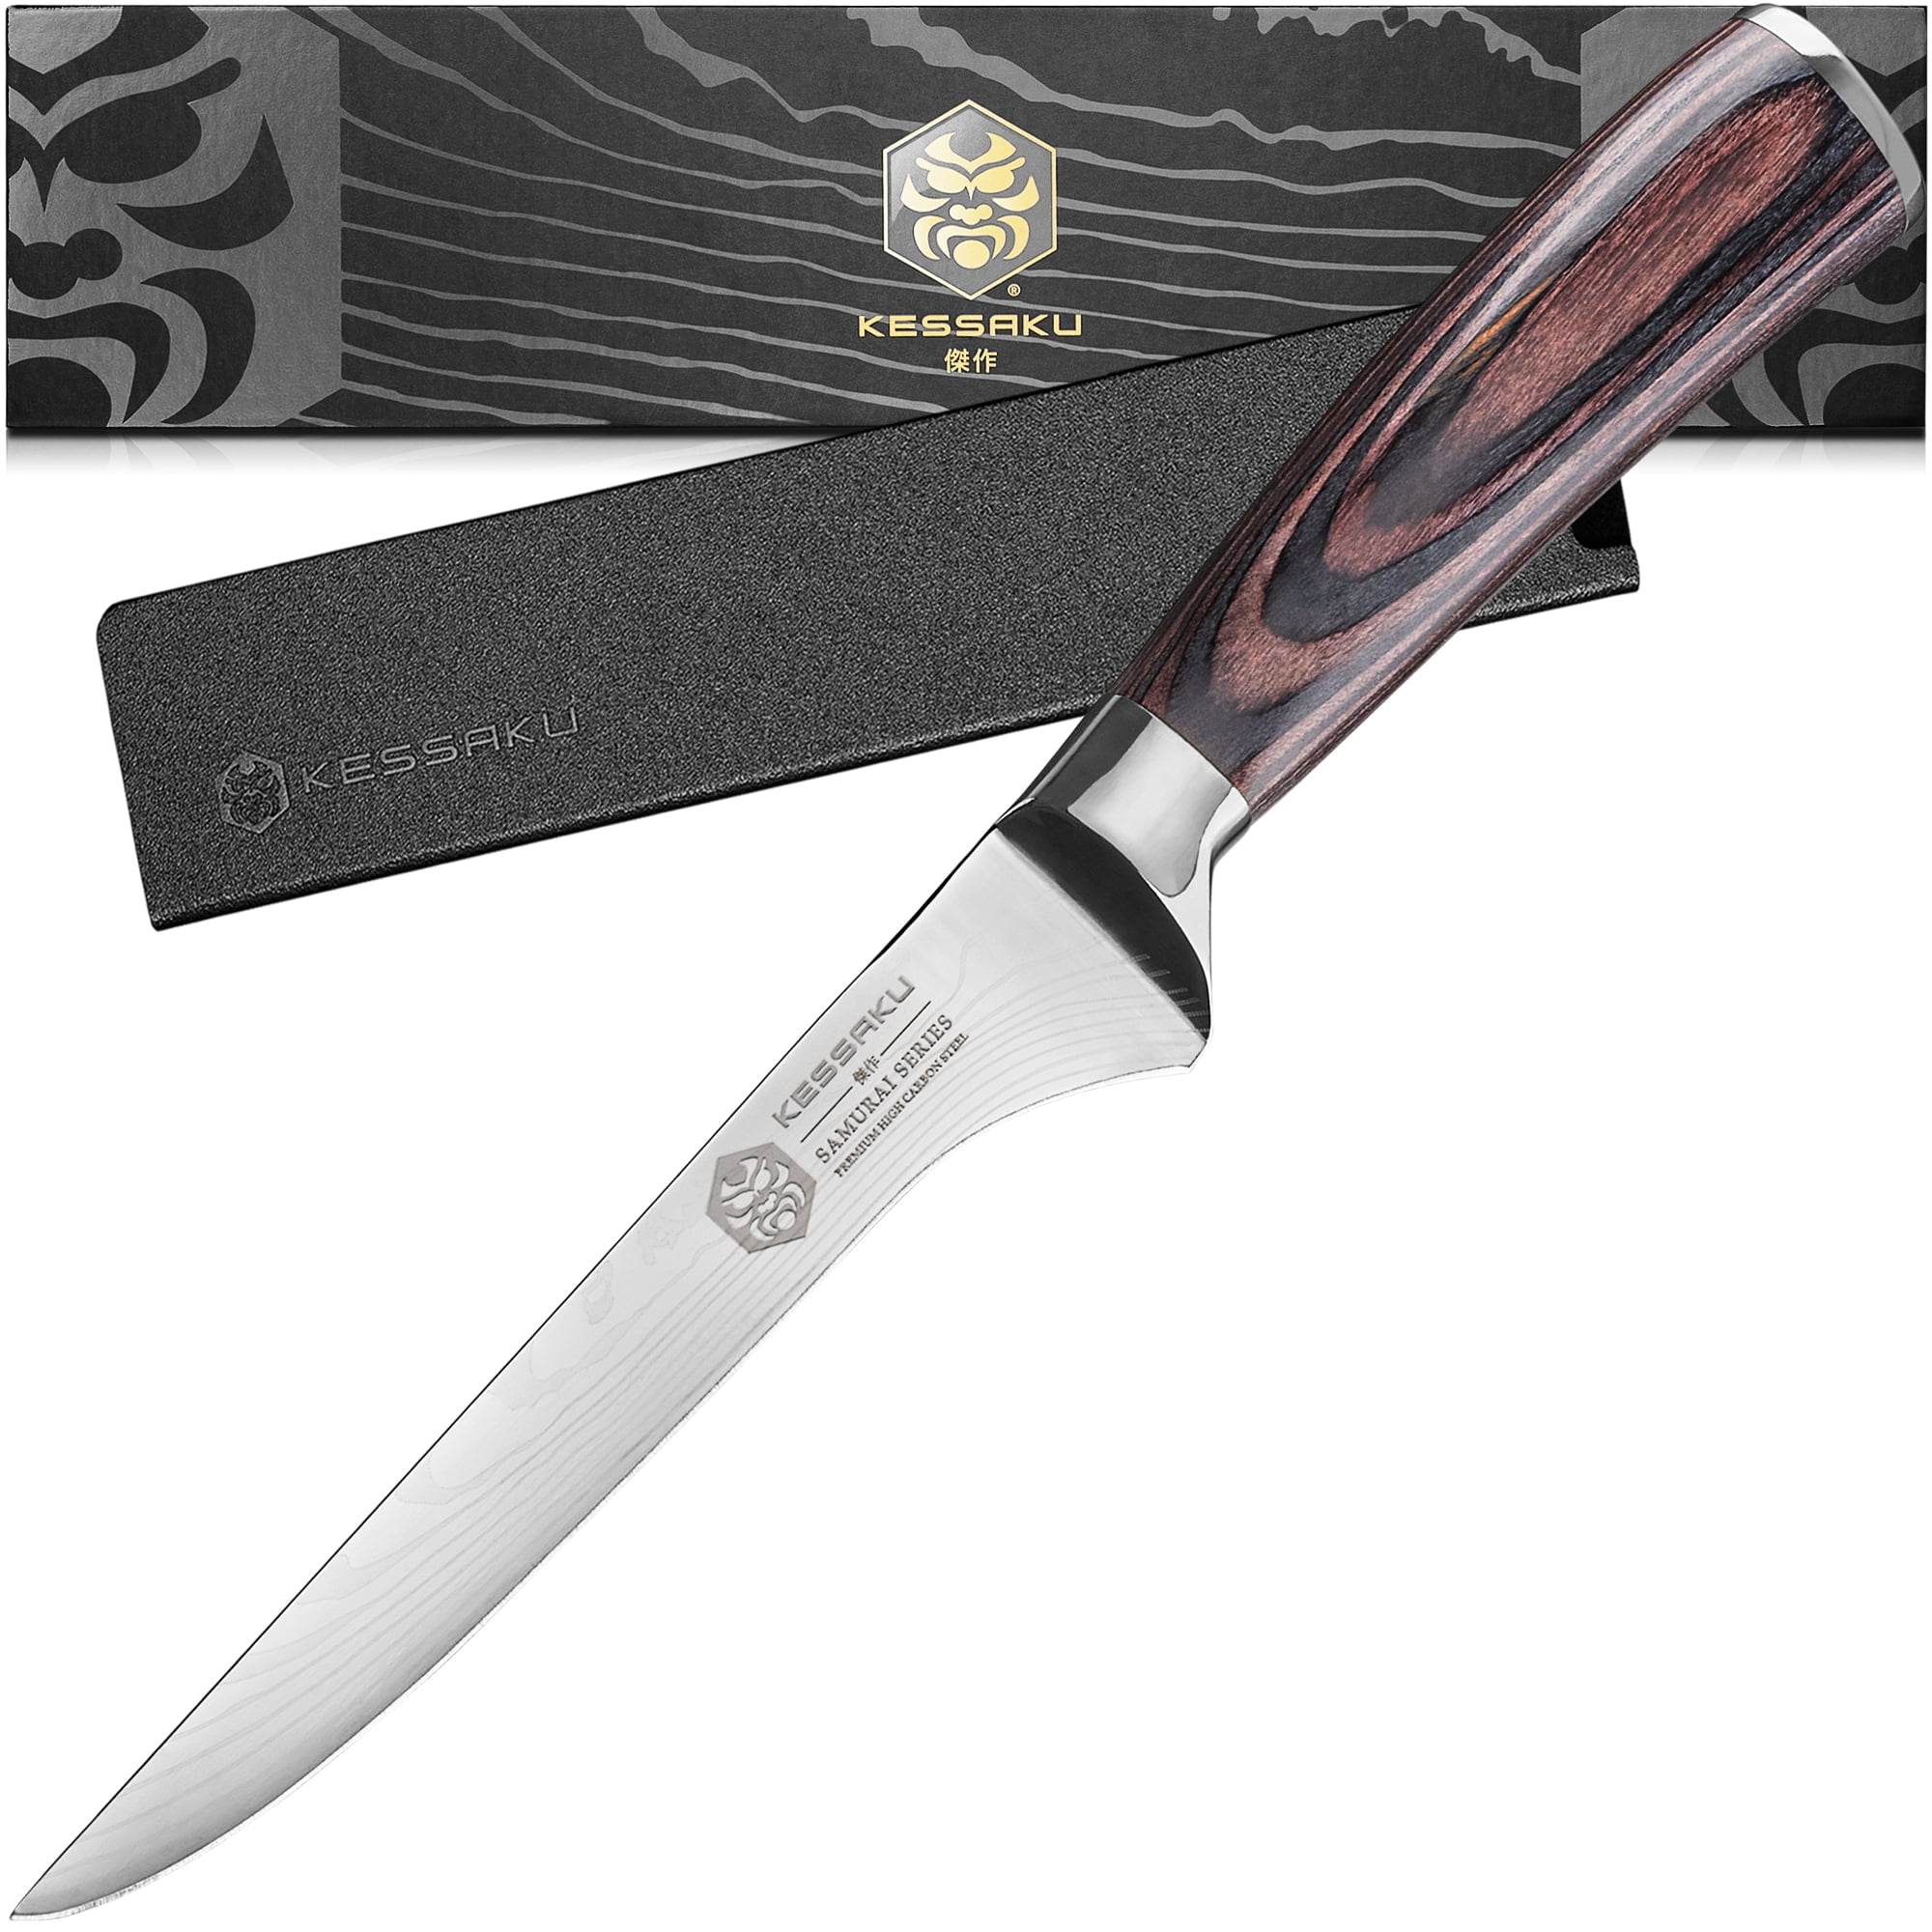 Kessaku 6-Inch Boning Knife - Samurai Series - Forged High Carbon 7cr17mov High Carbon Stainless Steel